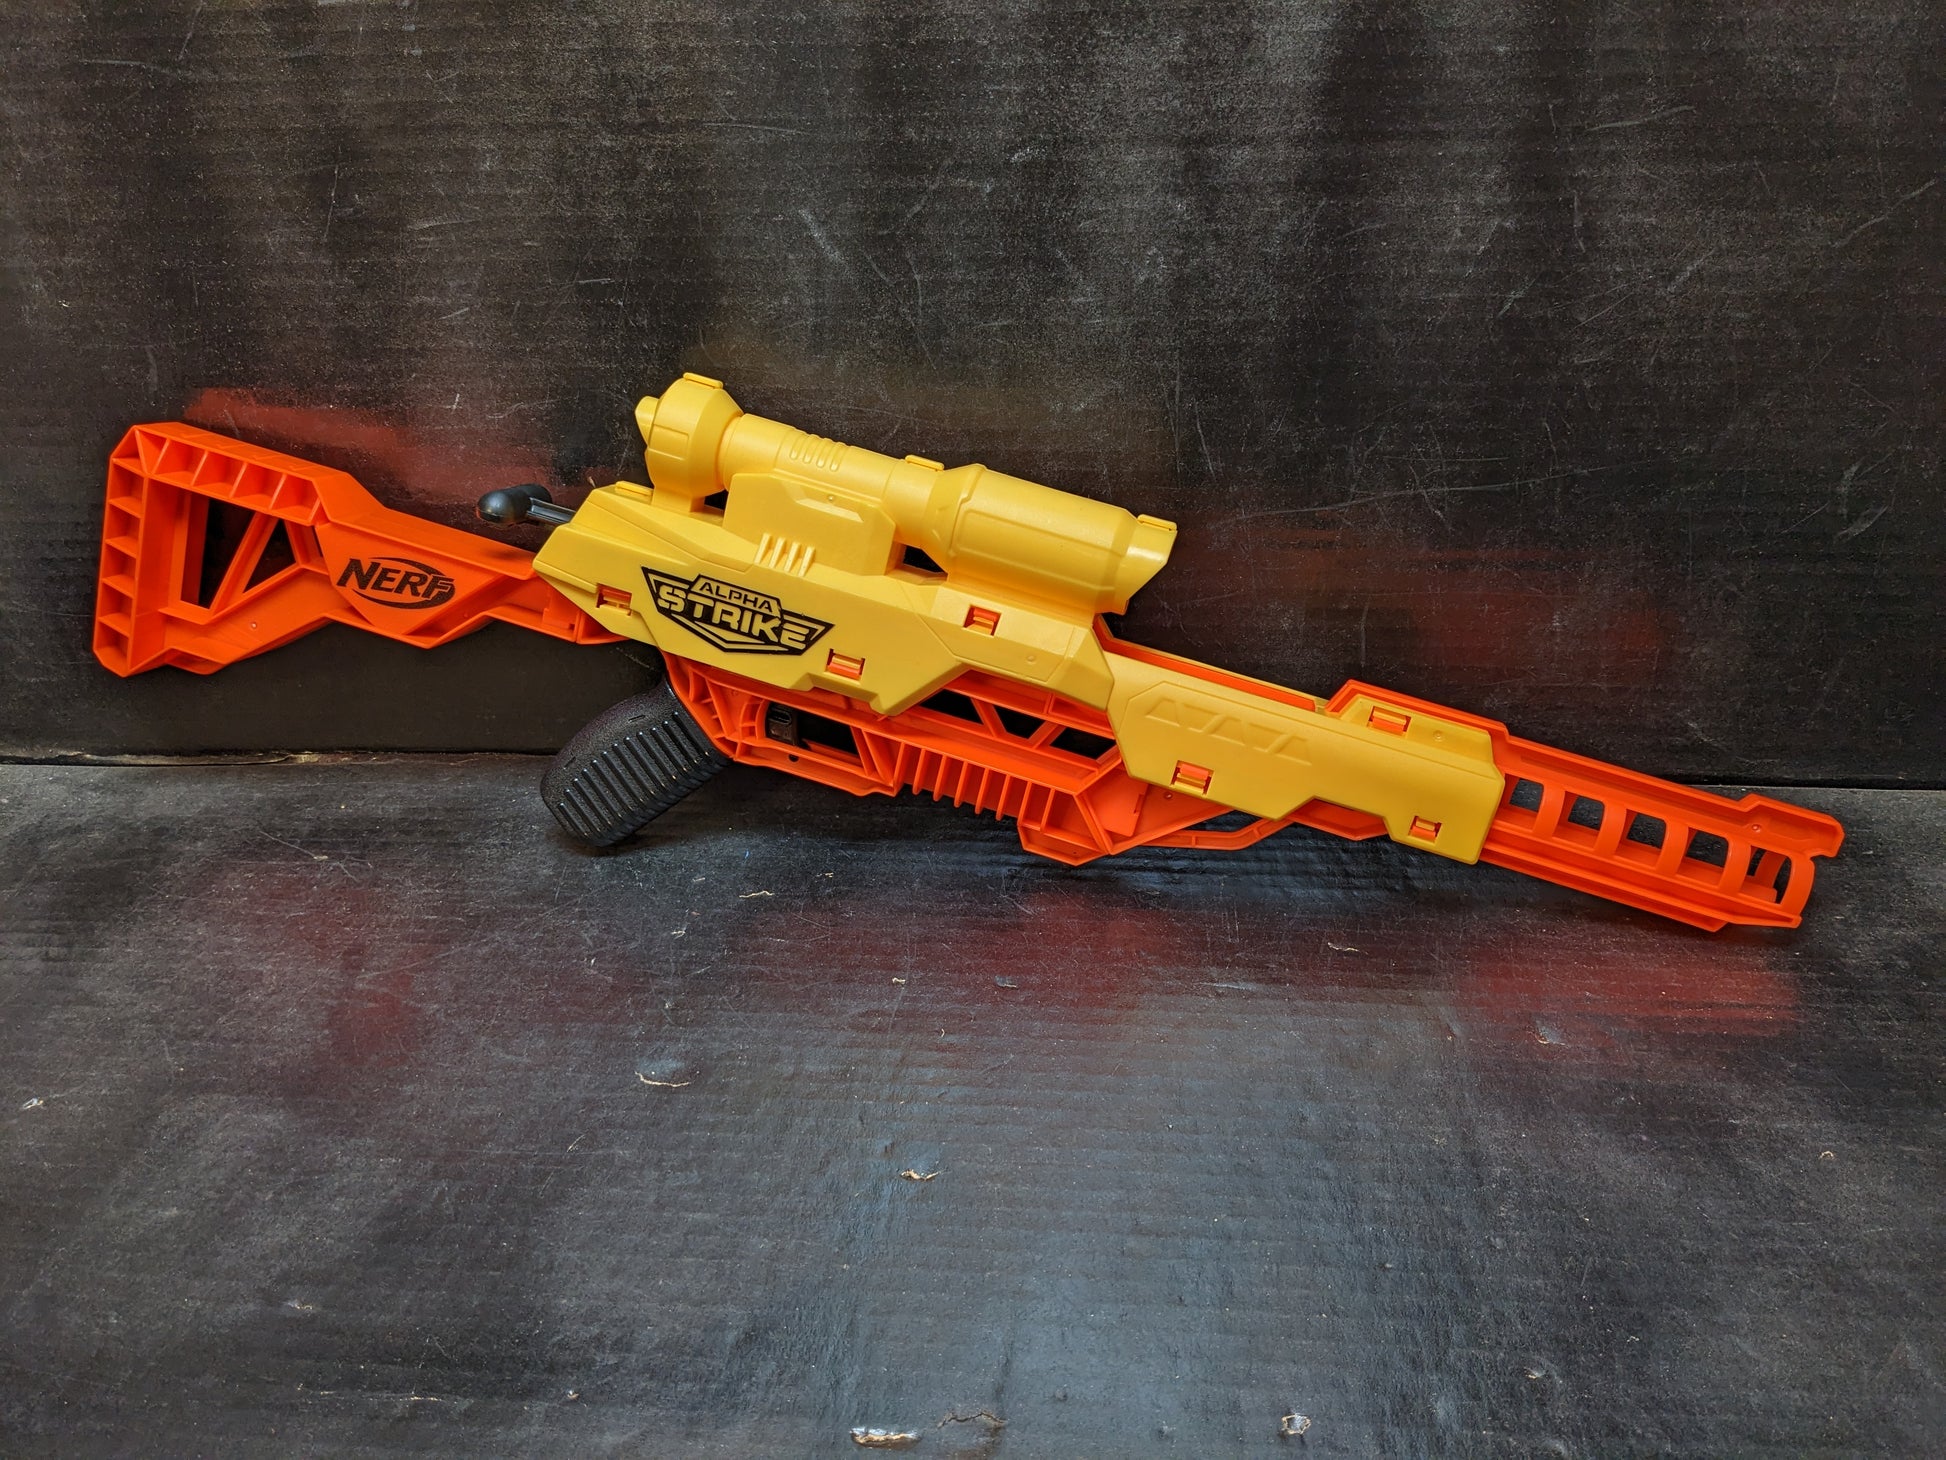  Nerf Alpha Strike Wolf LR-1 Toy Blaster with Targeting